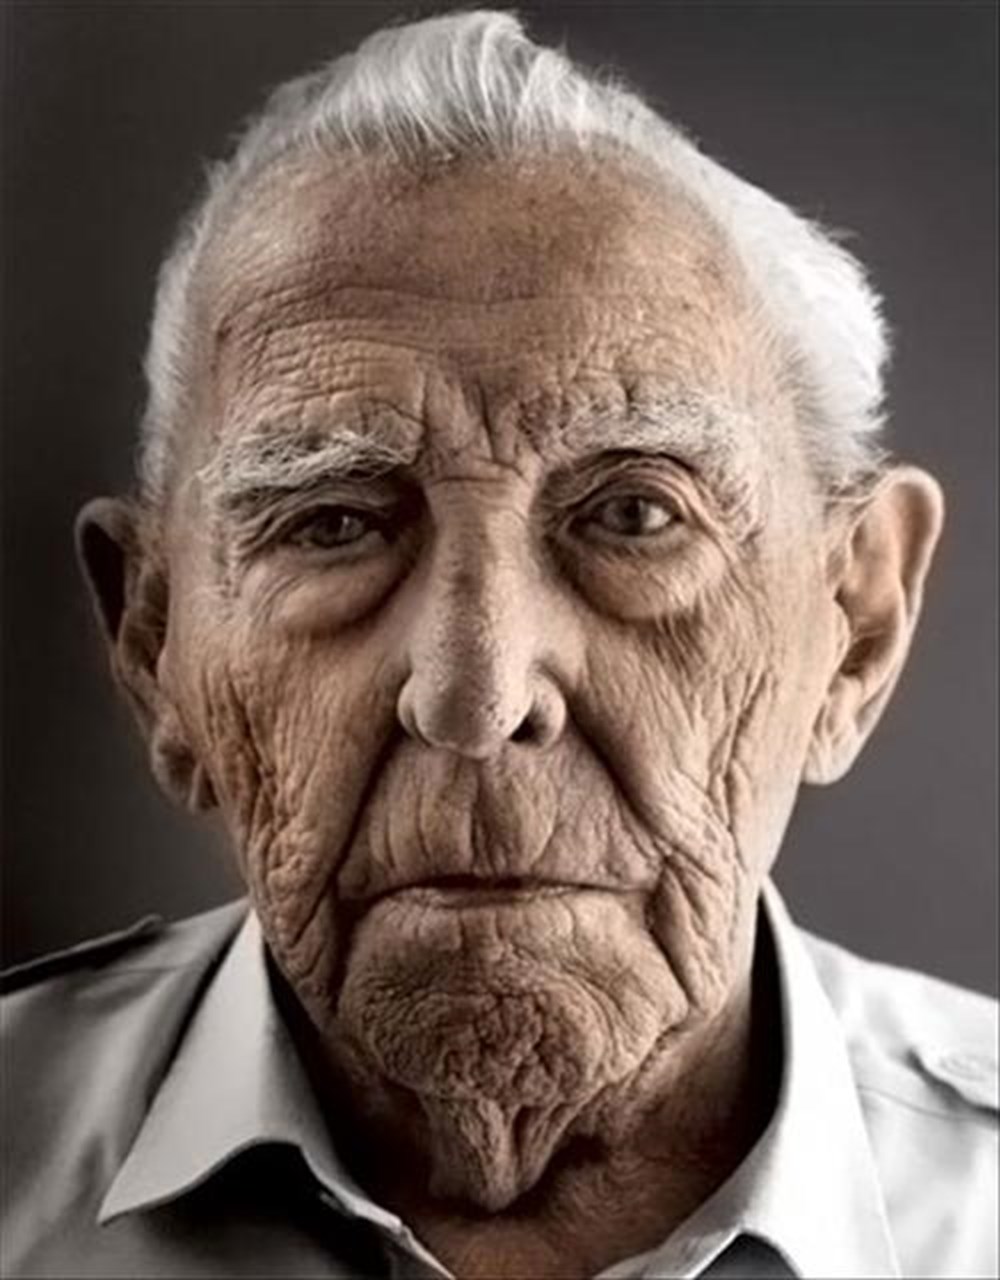 Old man face. Лицо старика. Фотопортрет старика. Портрет пожилого мужчины. Старый человек.